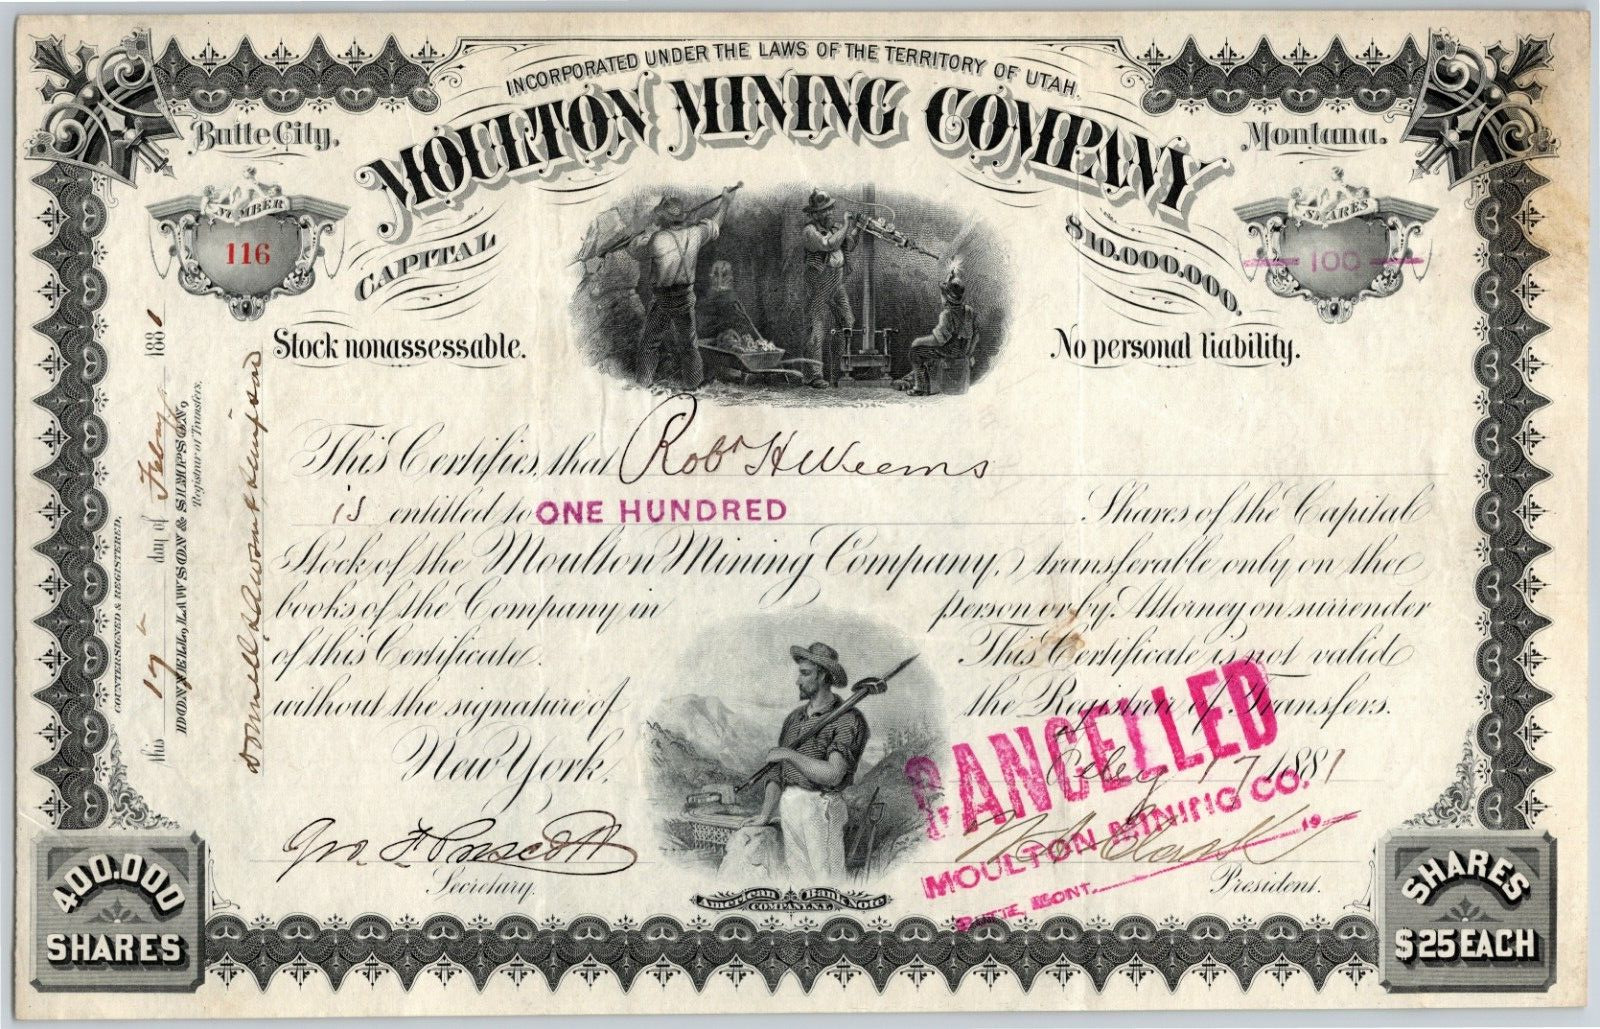 Moulton Mining Company Butte City Montana 1881 Stock Certificate #116 - Scarce